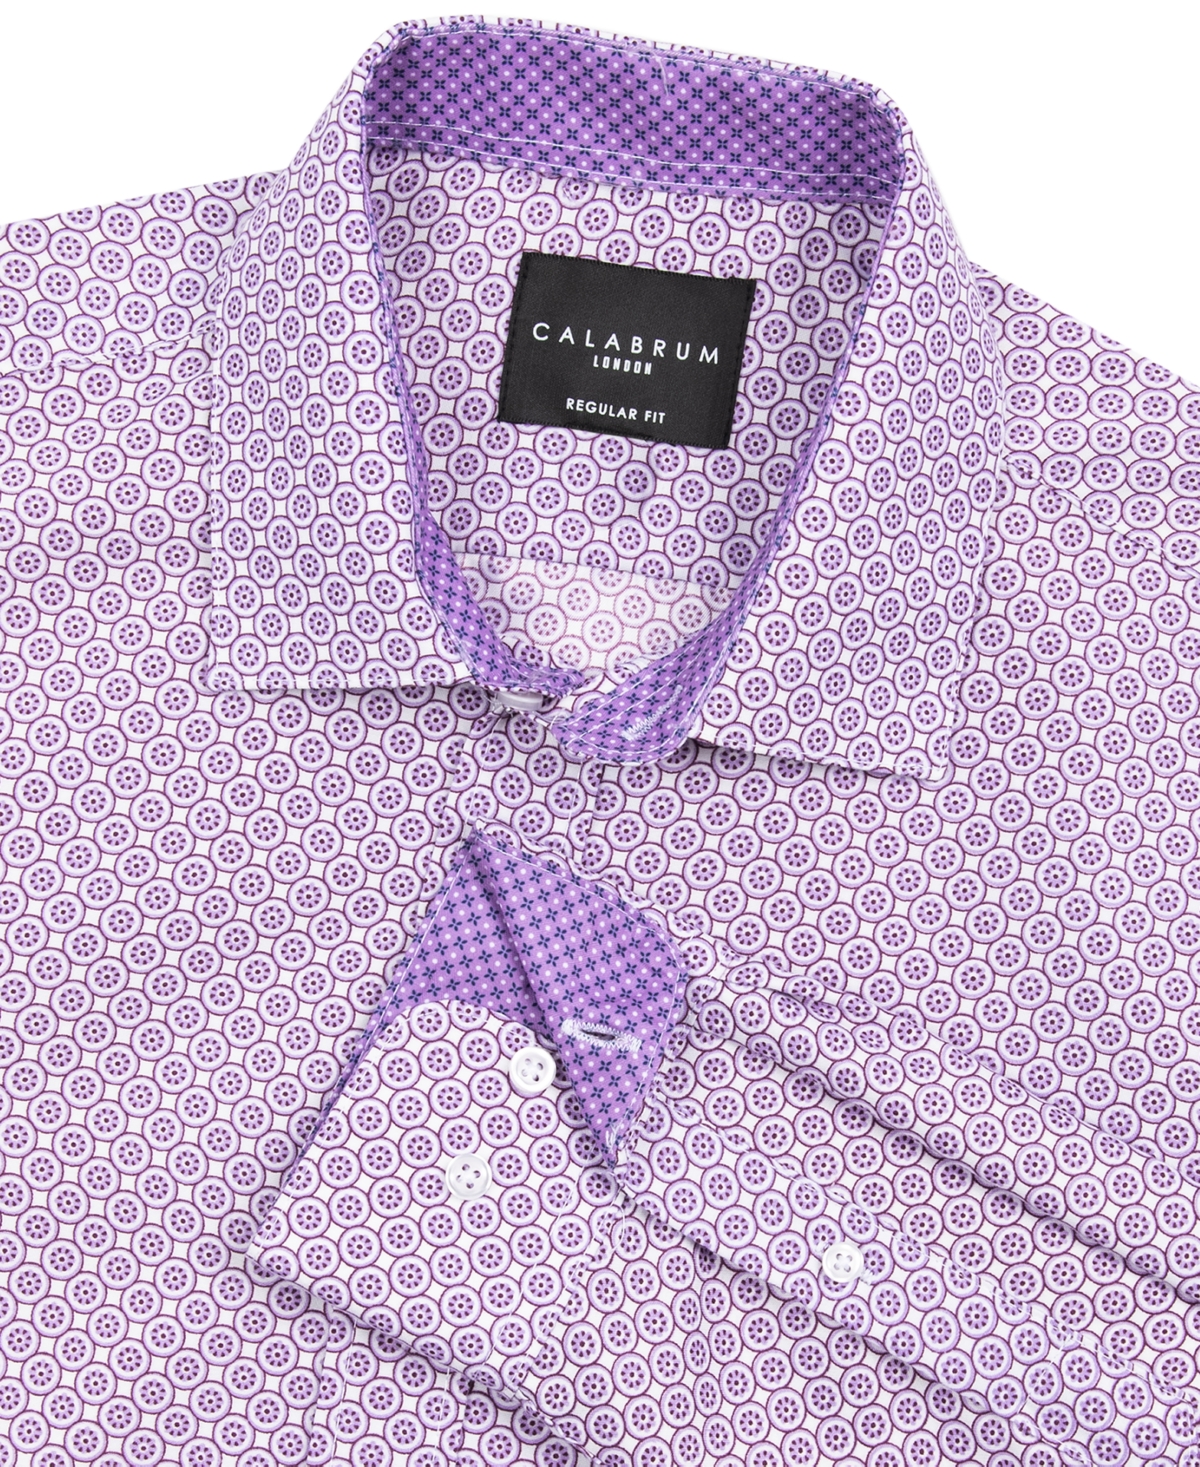 Calabrum Men's Regular Fit Dot Print Wrinkle Free Performance Dress Shirt In Purple